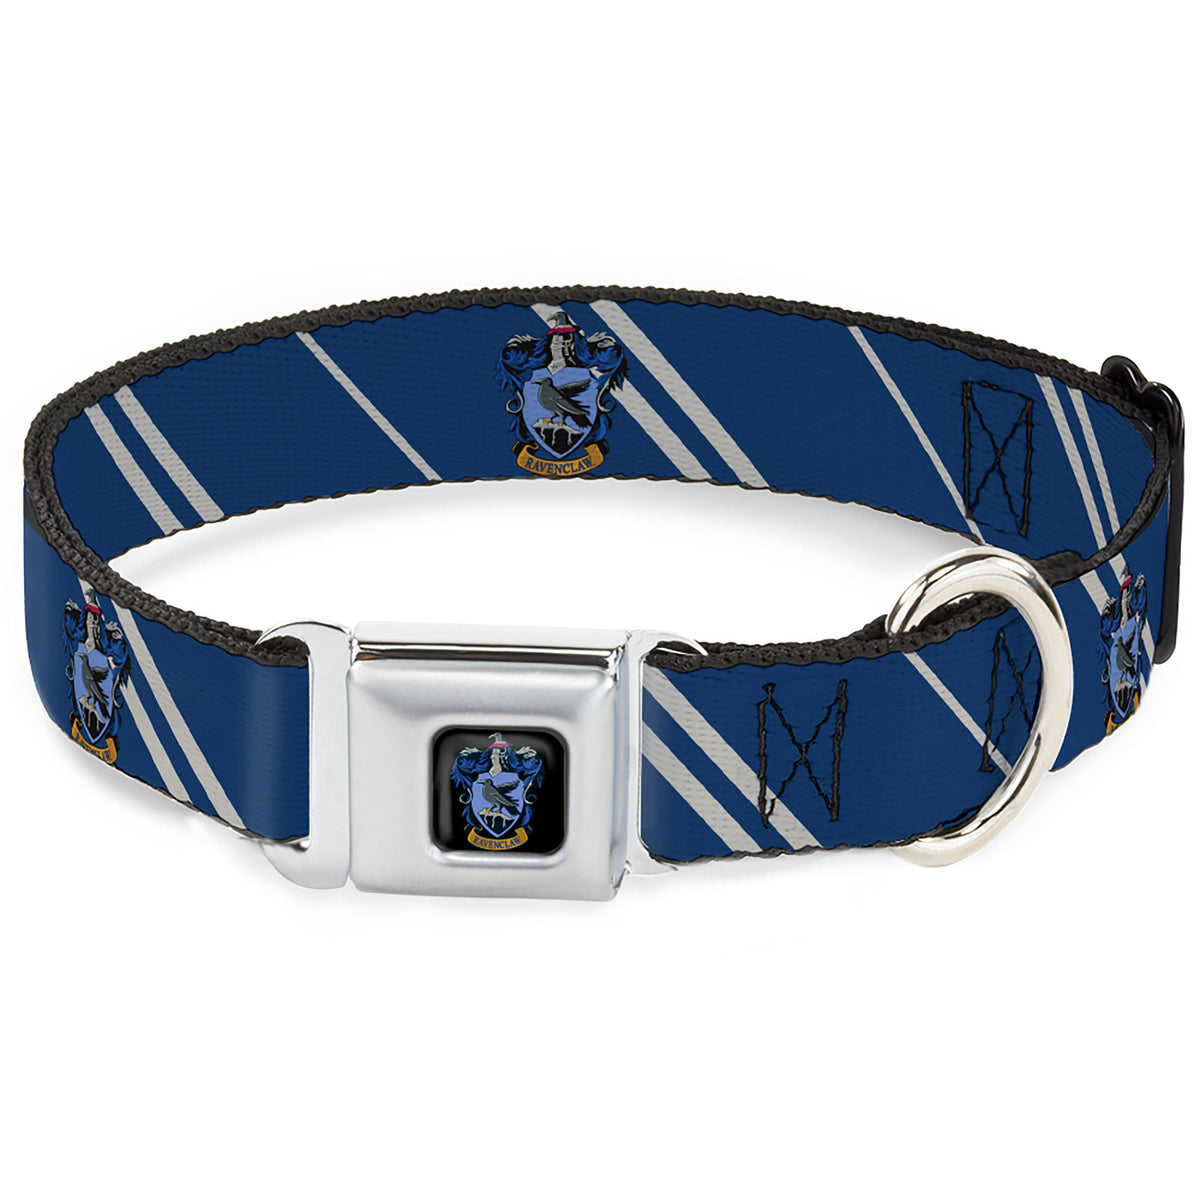 Ravenclaw Crest Full Color Seatbelt Buckle Collar - RAVENCLAW Crest/Stripe Blue/Gray